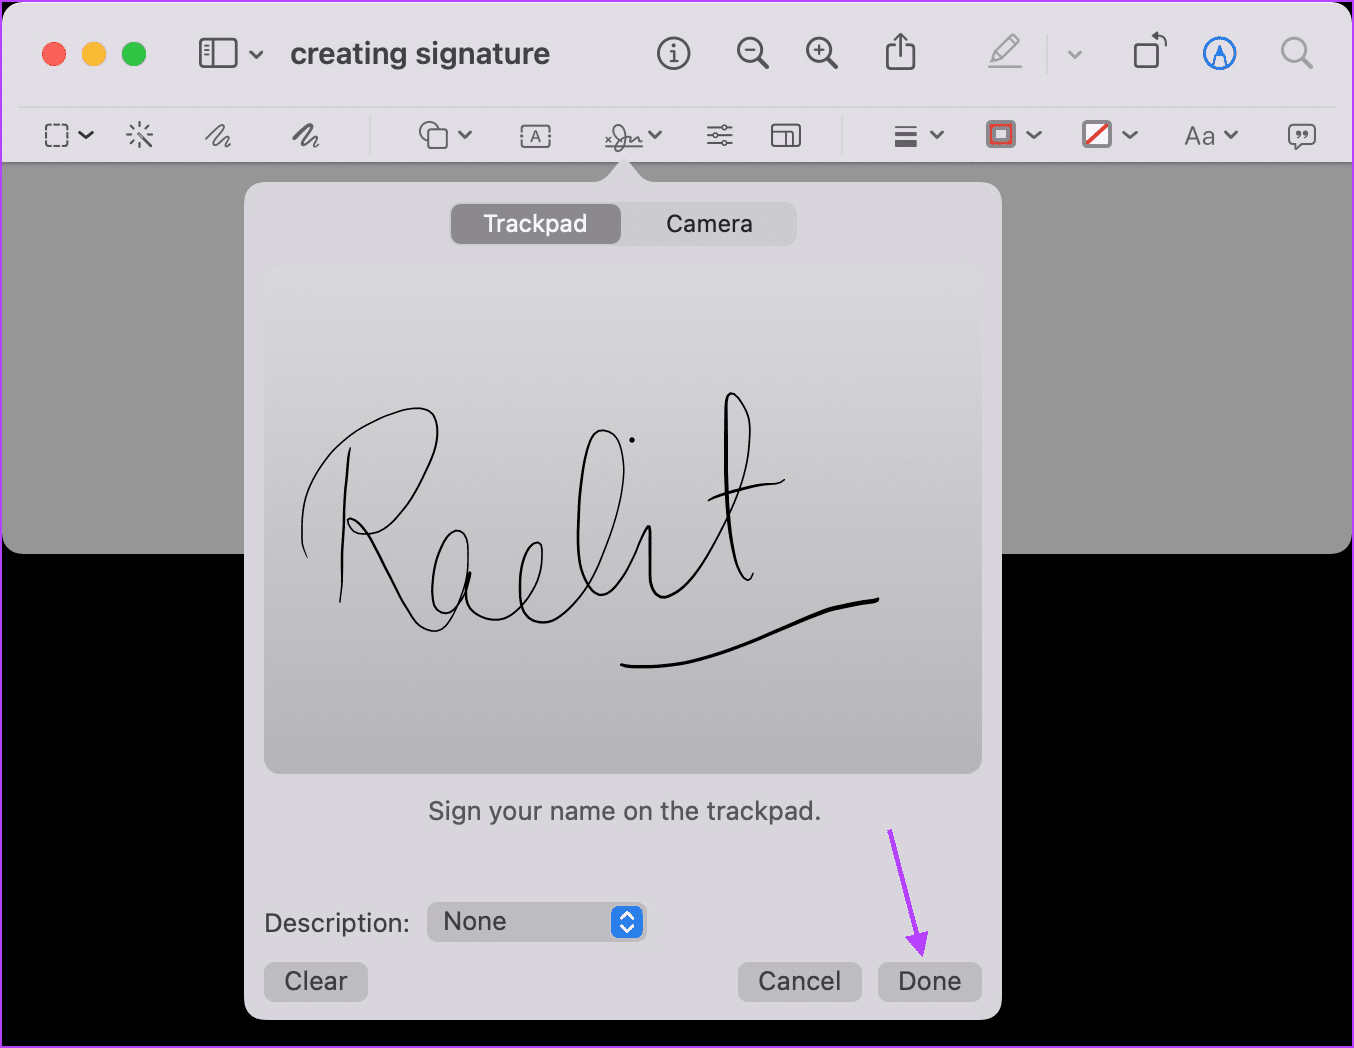 Create your signature using trackpad 2